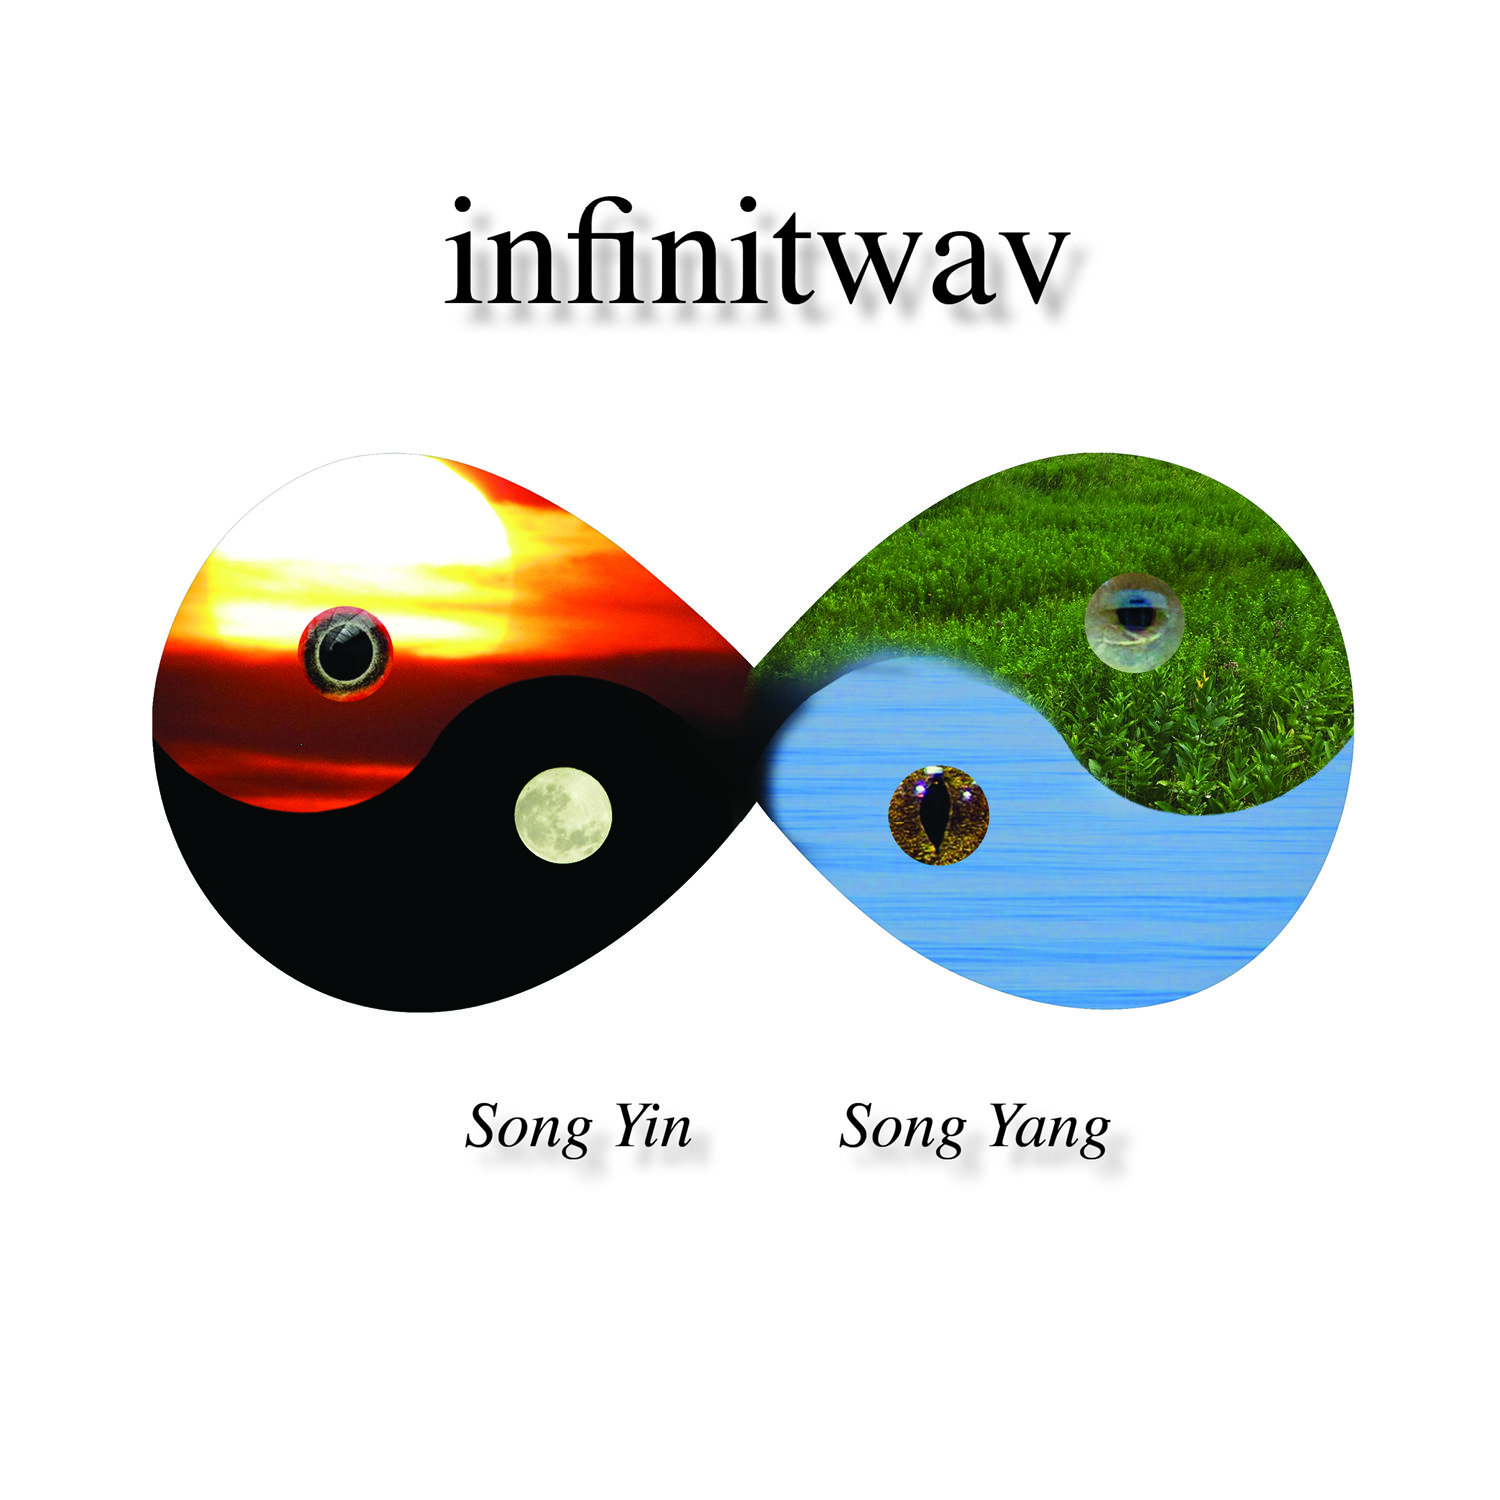 Kaw Yin Yan Yin - Songs, Events and Music Stats